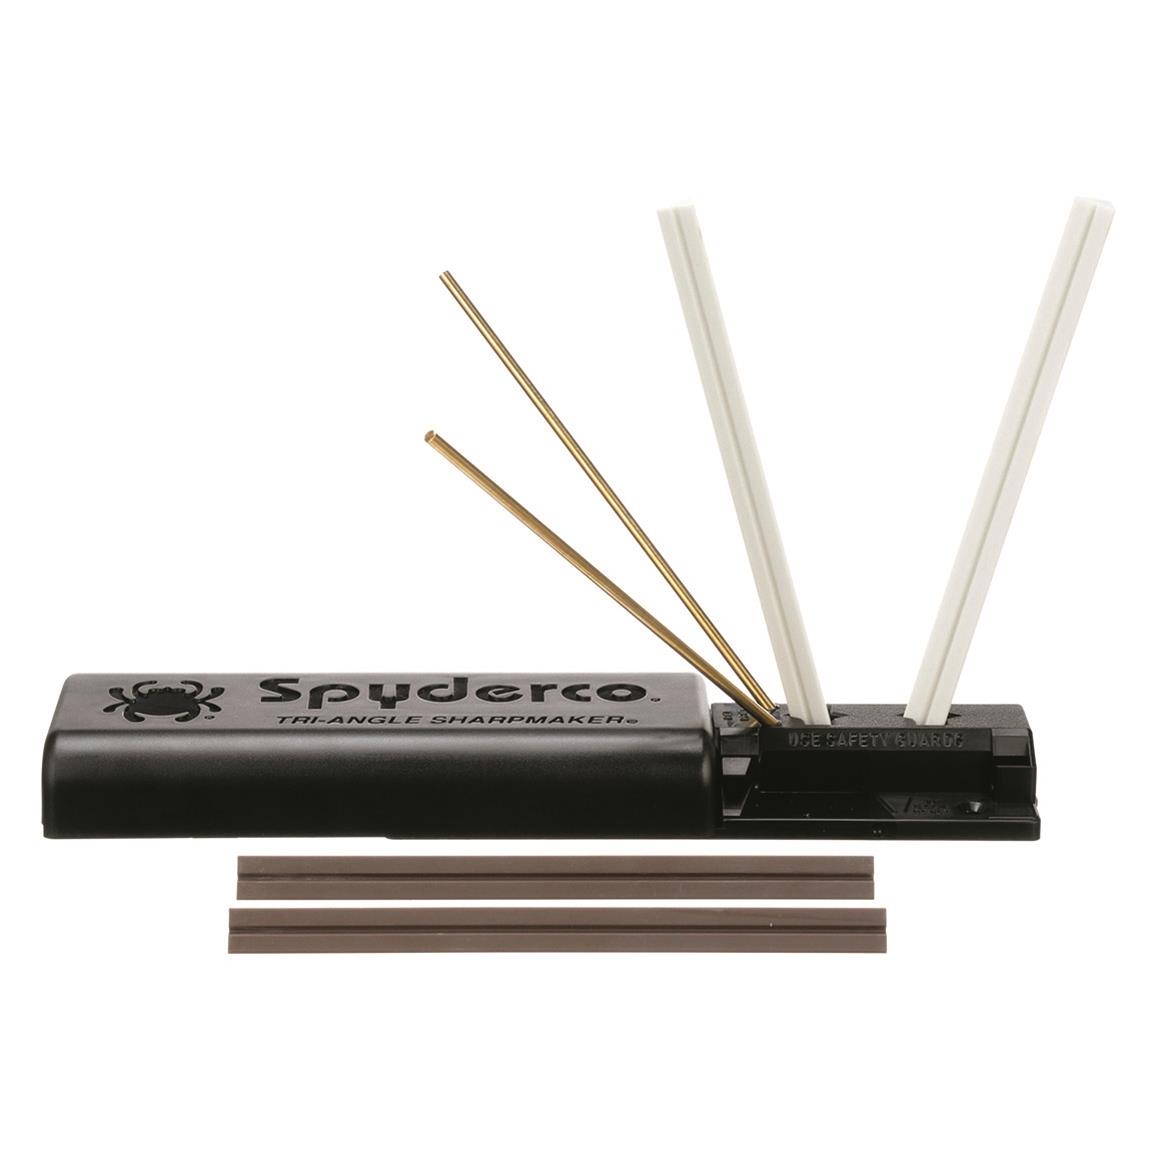 Spyderco Tri-Angle Sharpmaker Manual Sharpener